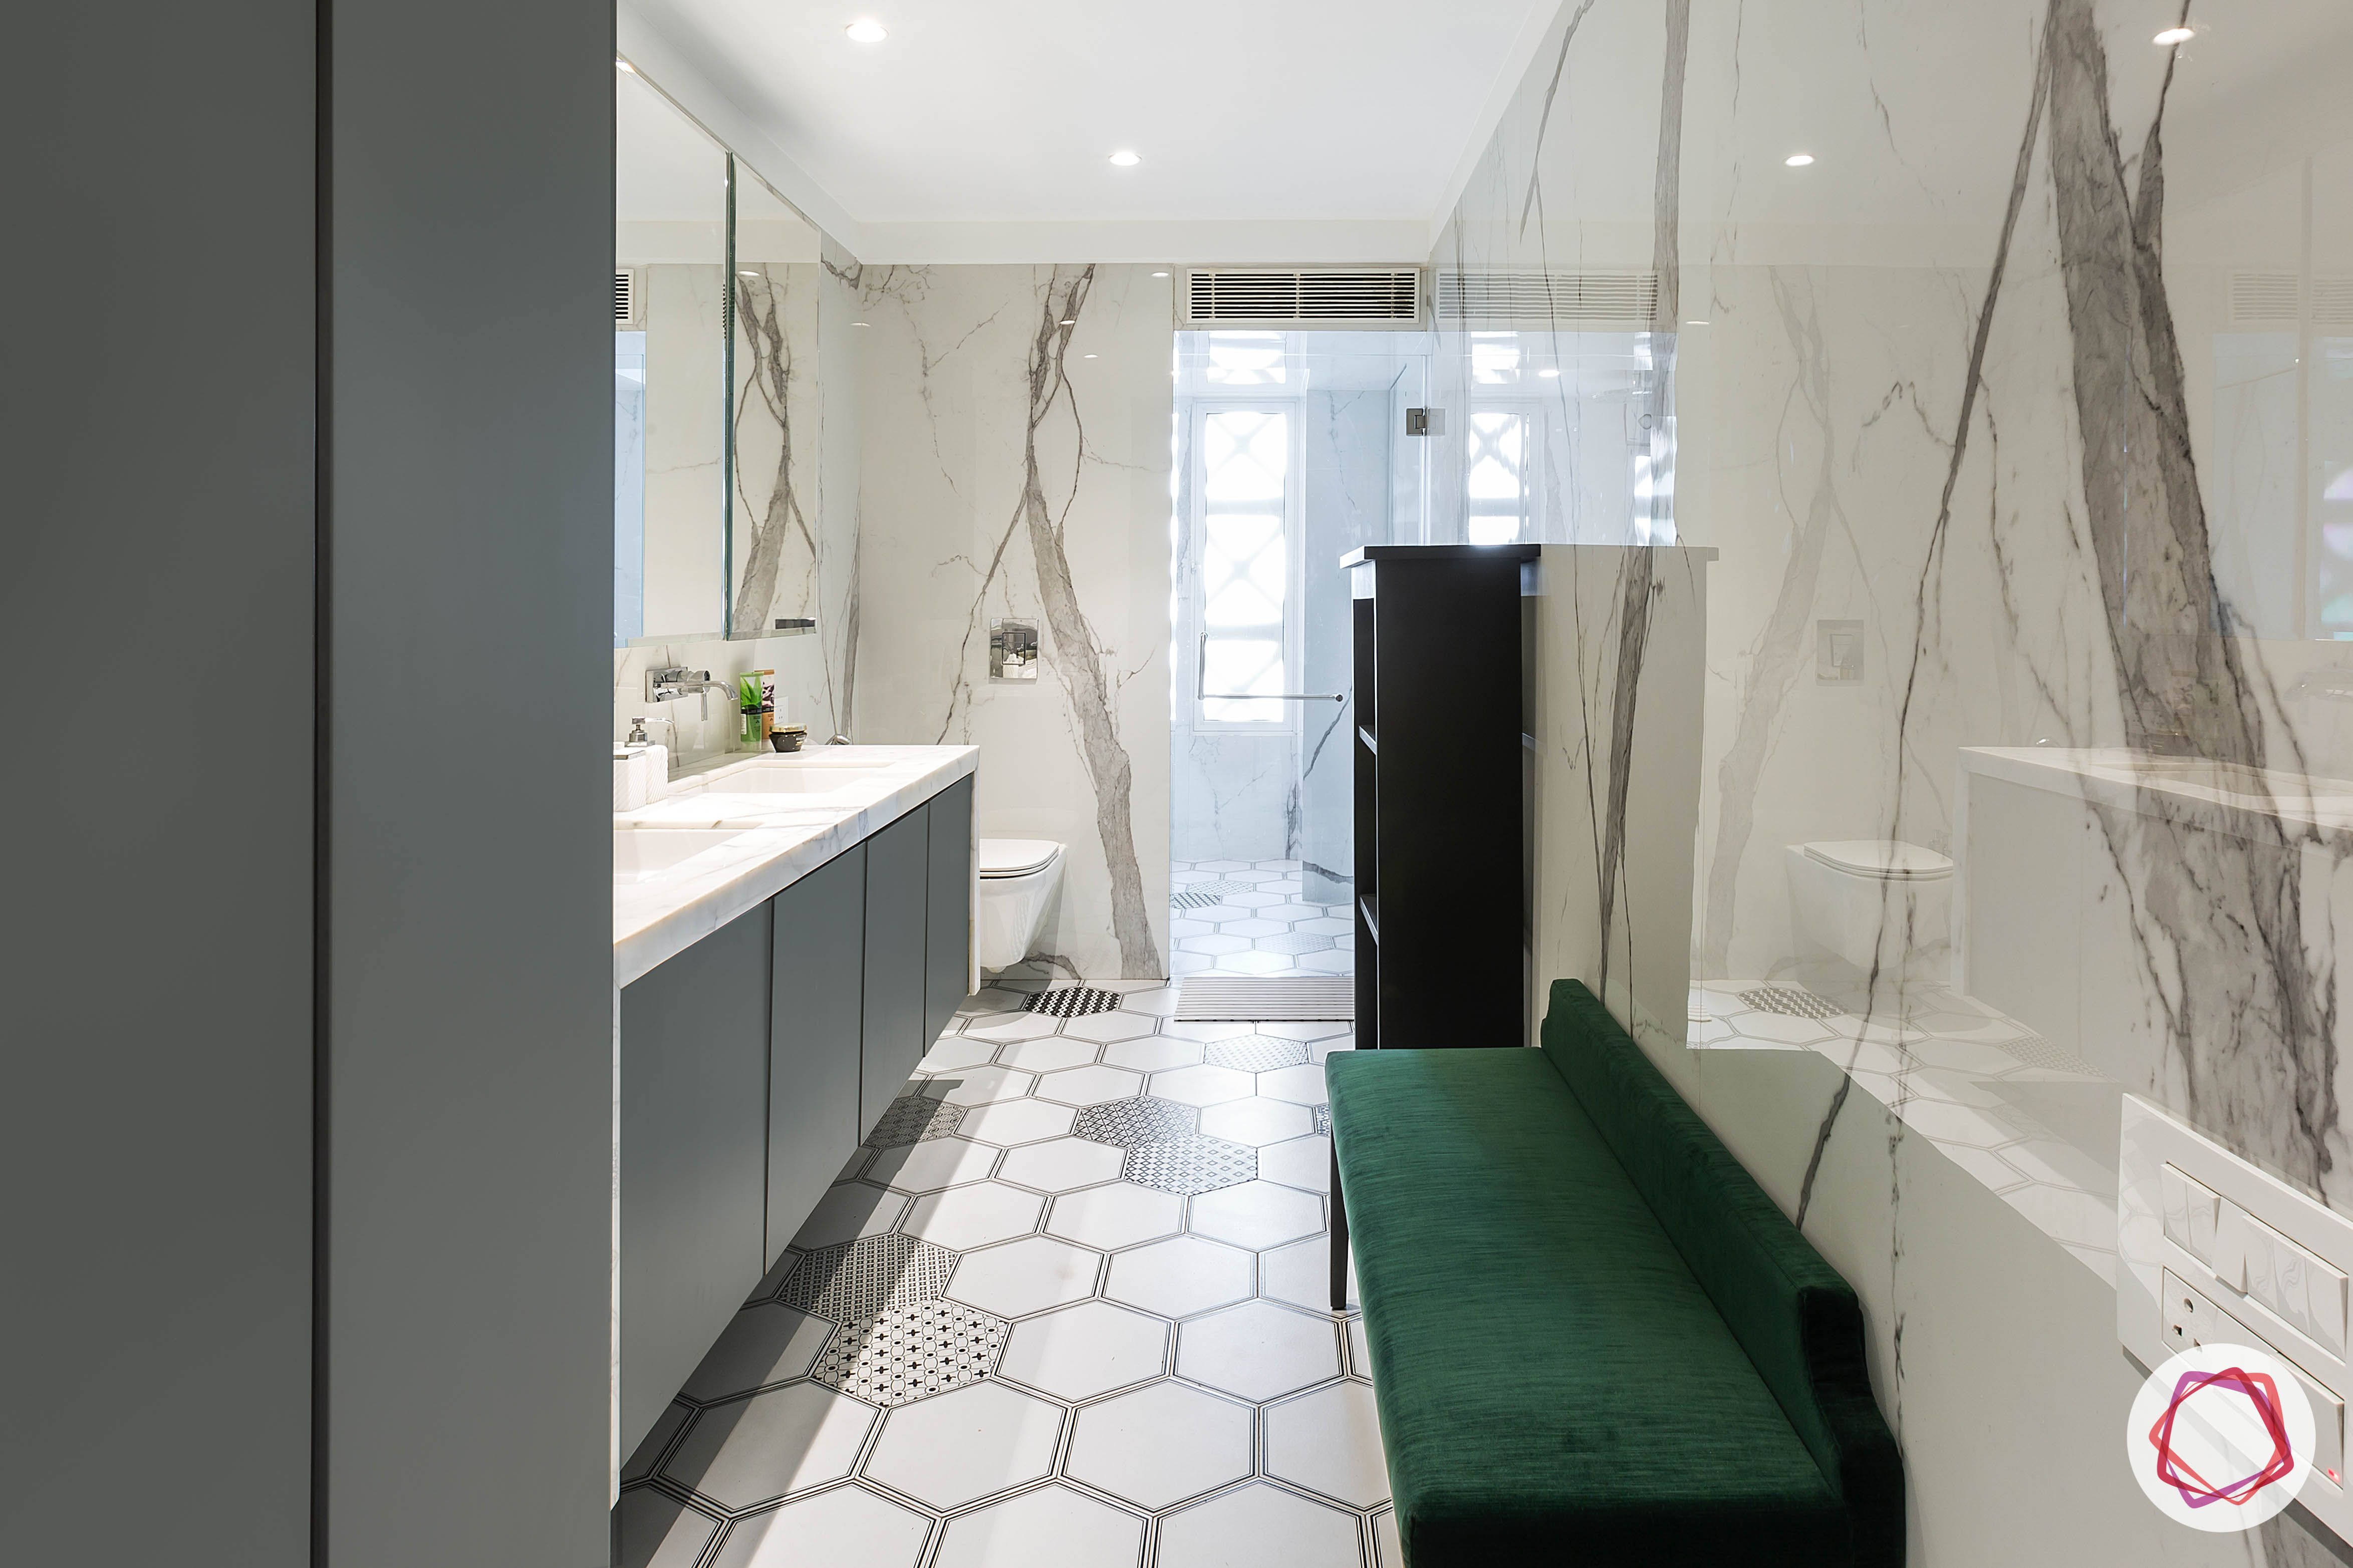 4bhk house plan-master bathroom designs-large bathroom designs-bathroom marble designs-bathroom tile designs-hexagonal tiles-bathroom seating ideas-cushioned bench designs